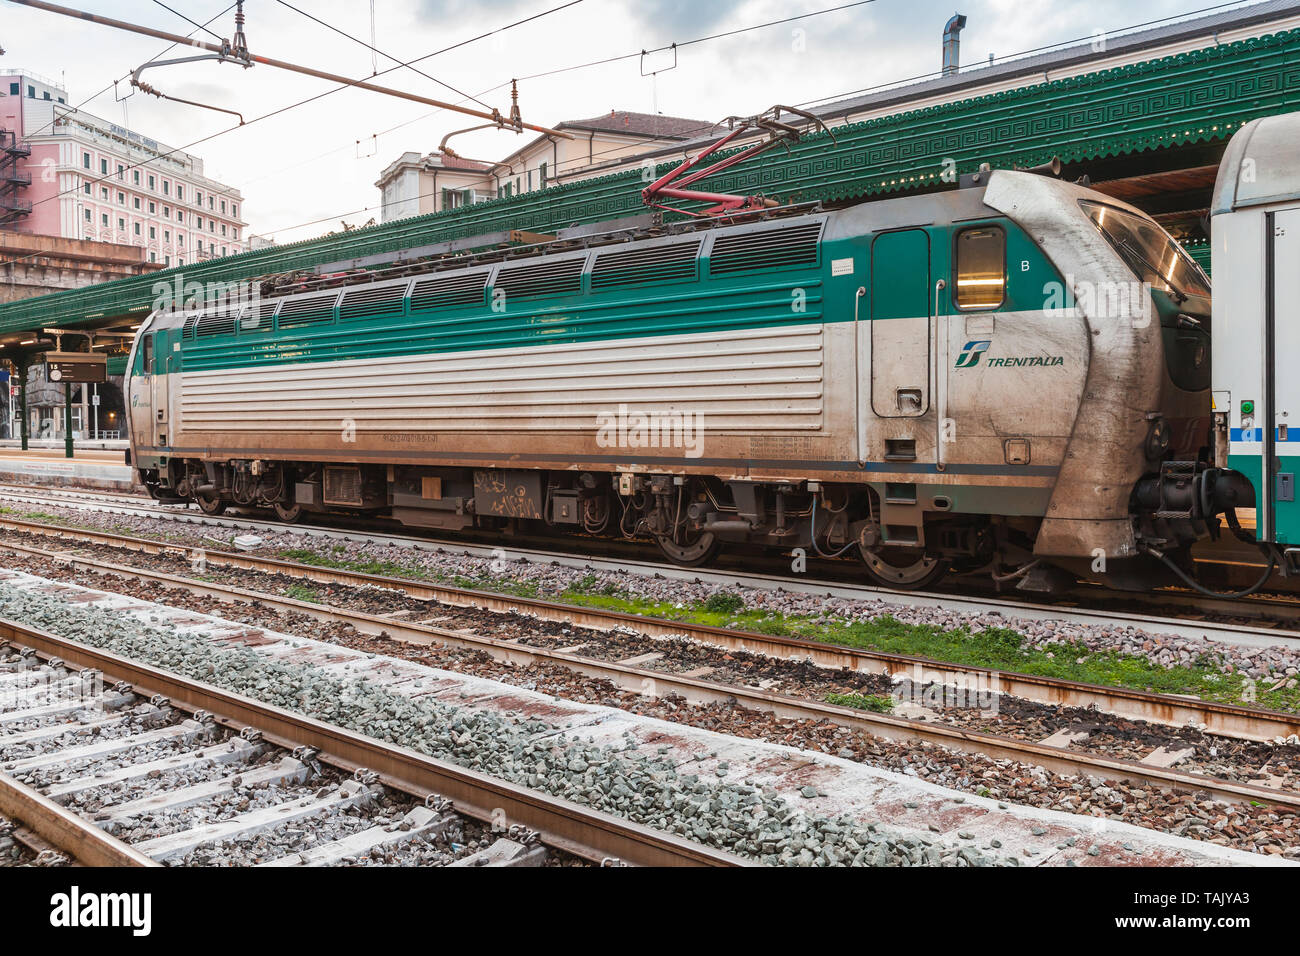 Genova, Italy - January 19, 2018: White green locomotive by Trenitalia which is the primary train operator in Italy Stock Photo